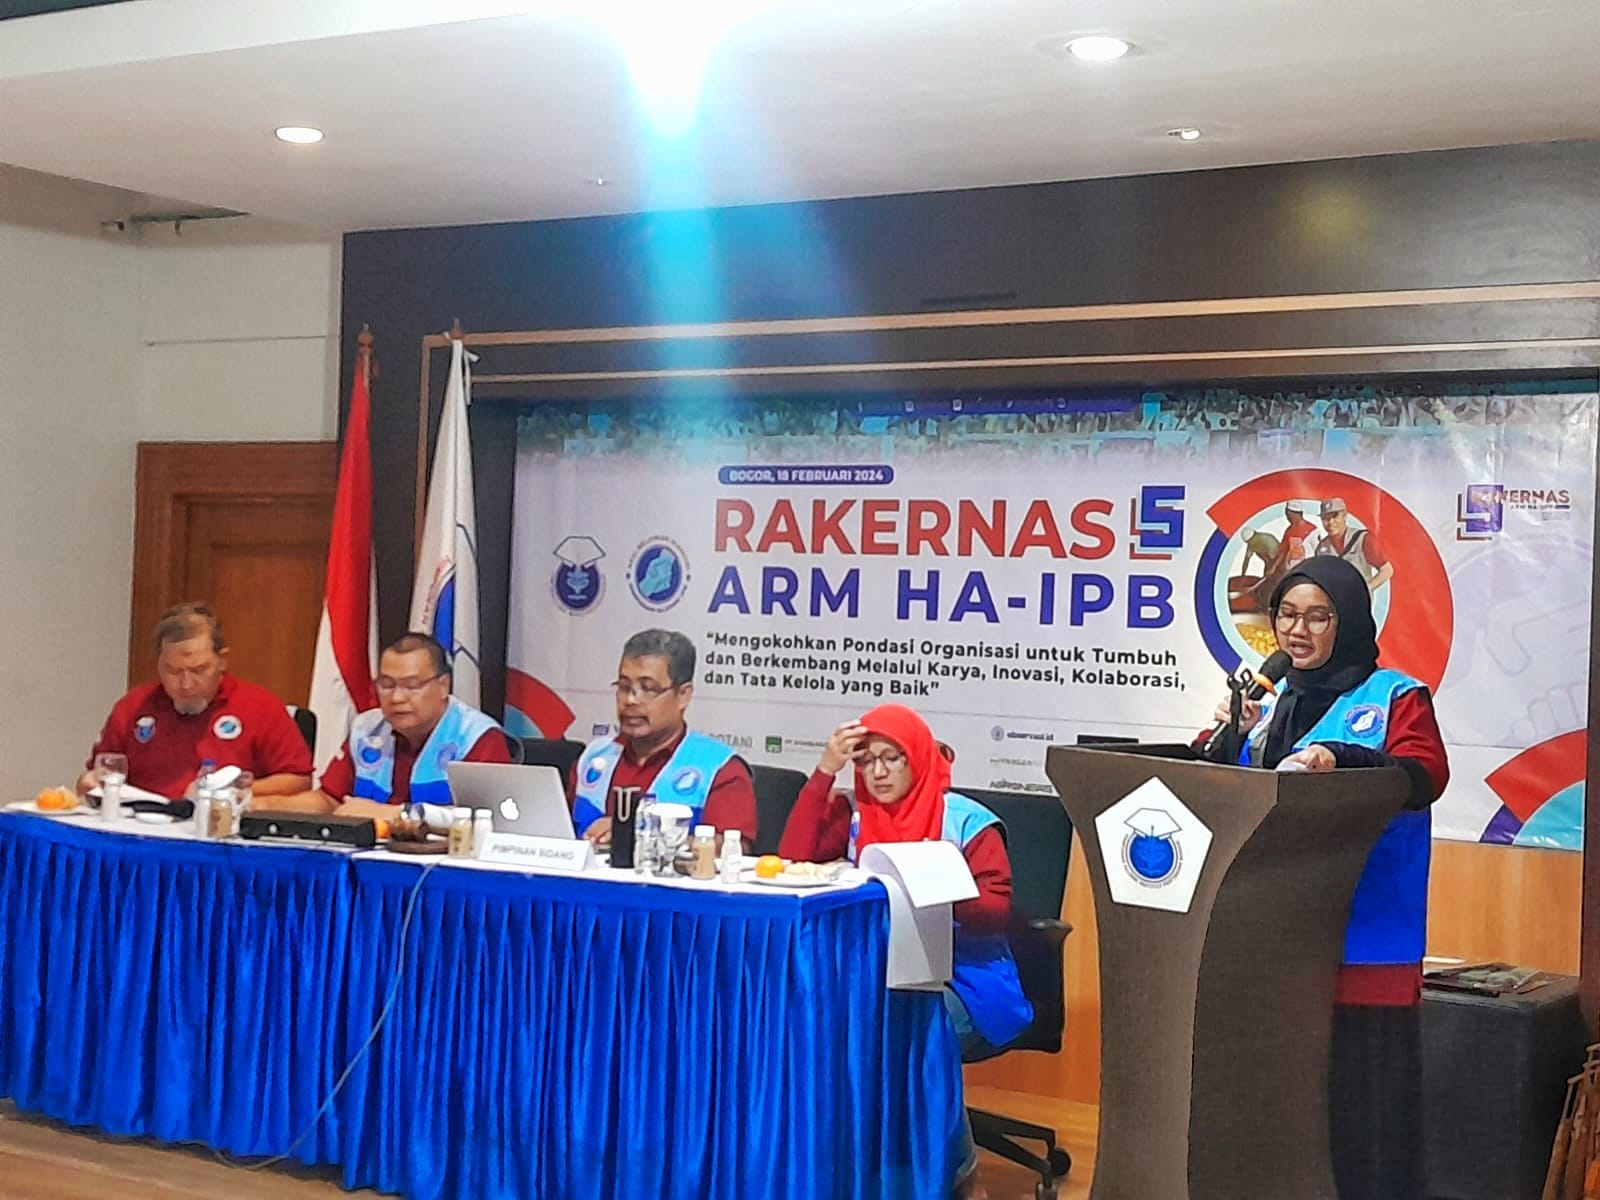 Relawan Mandiri Himpunan Alumni IPB ARM HA IPB